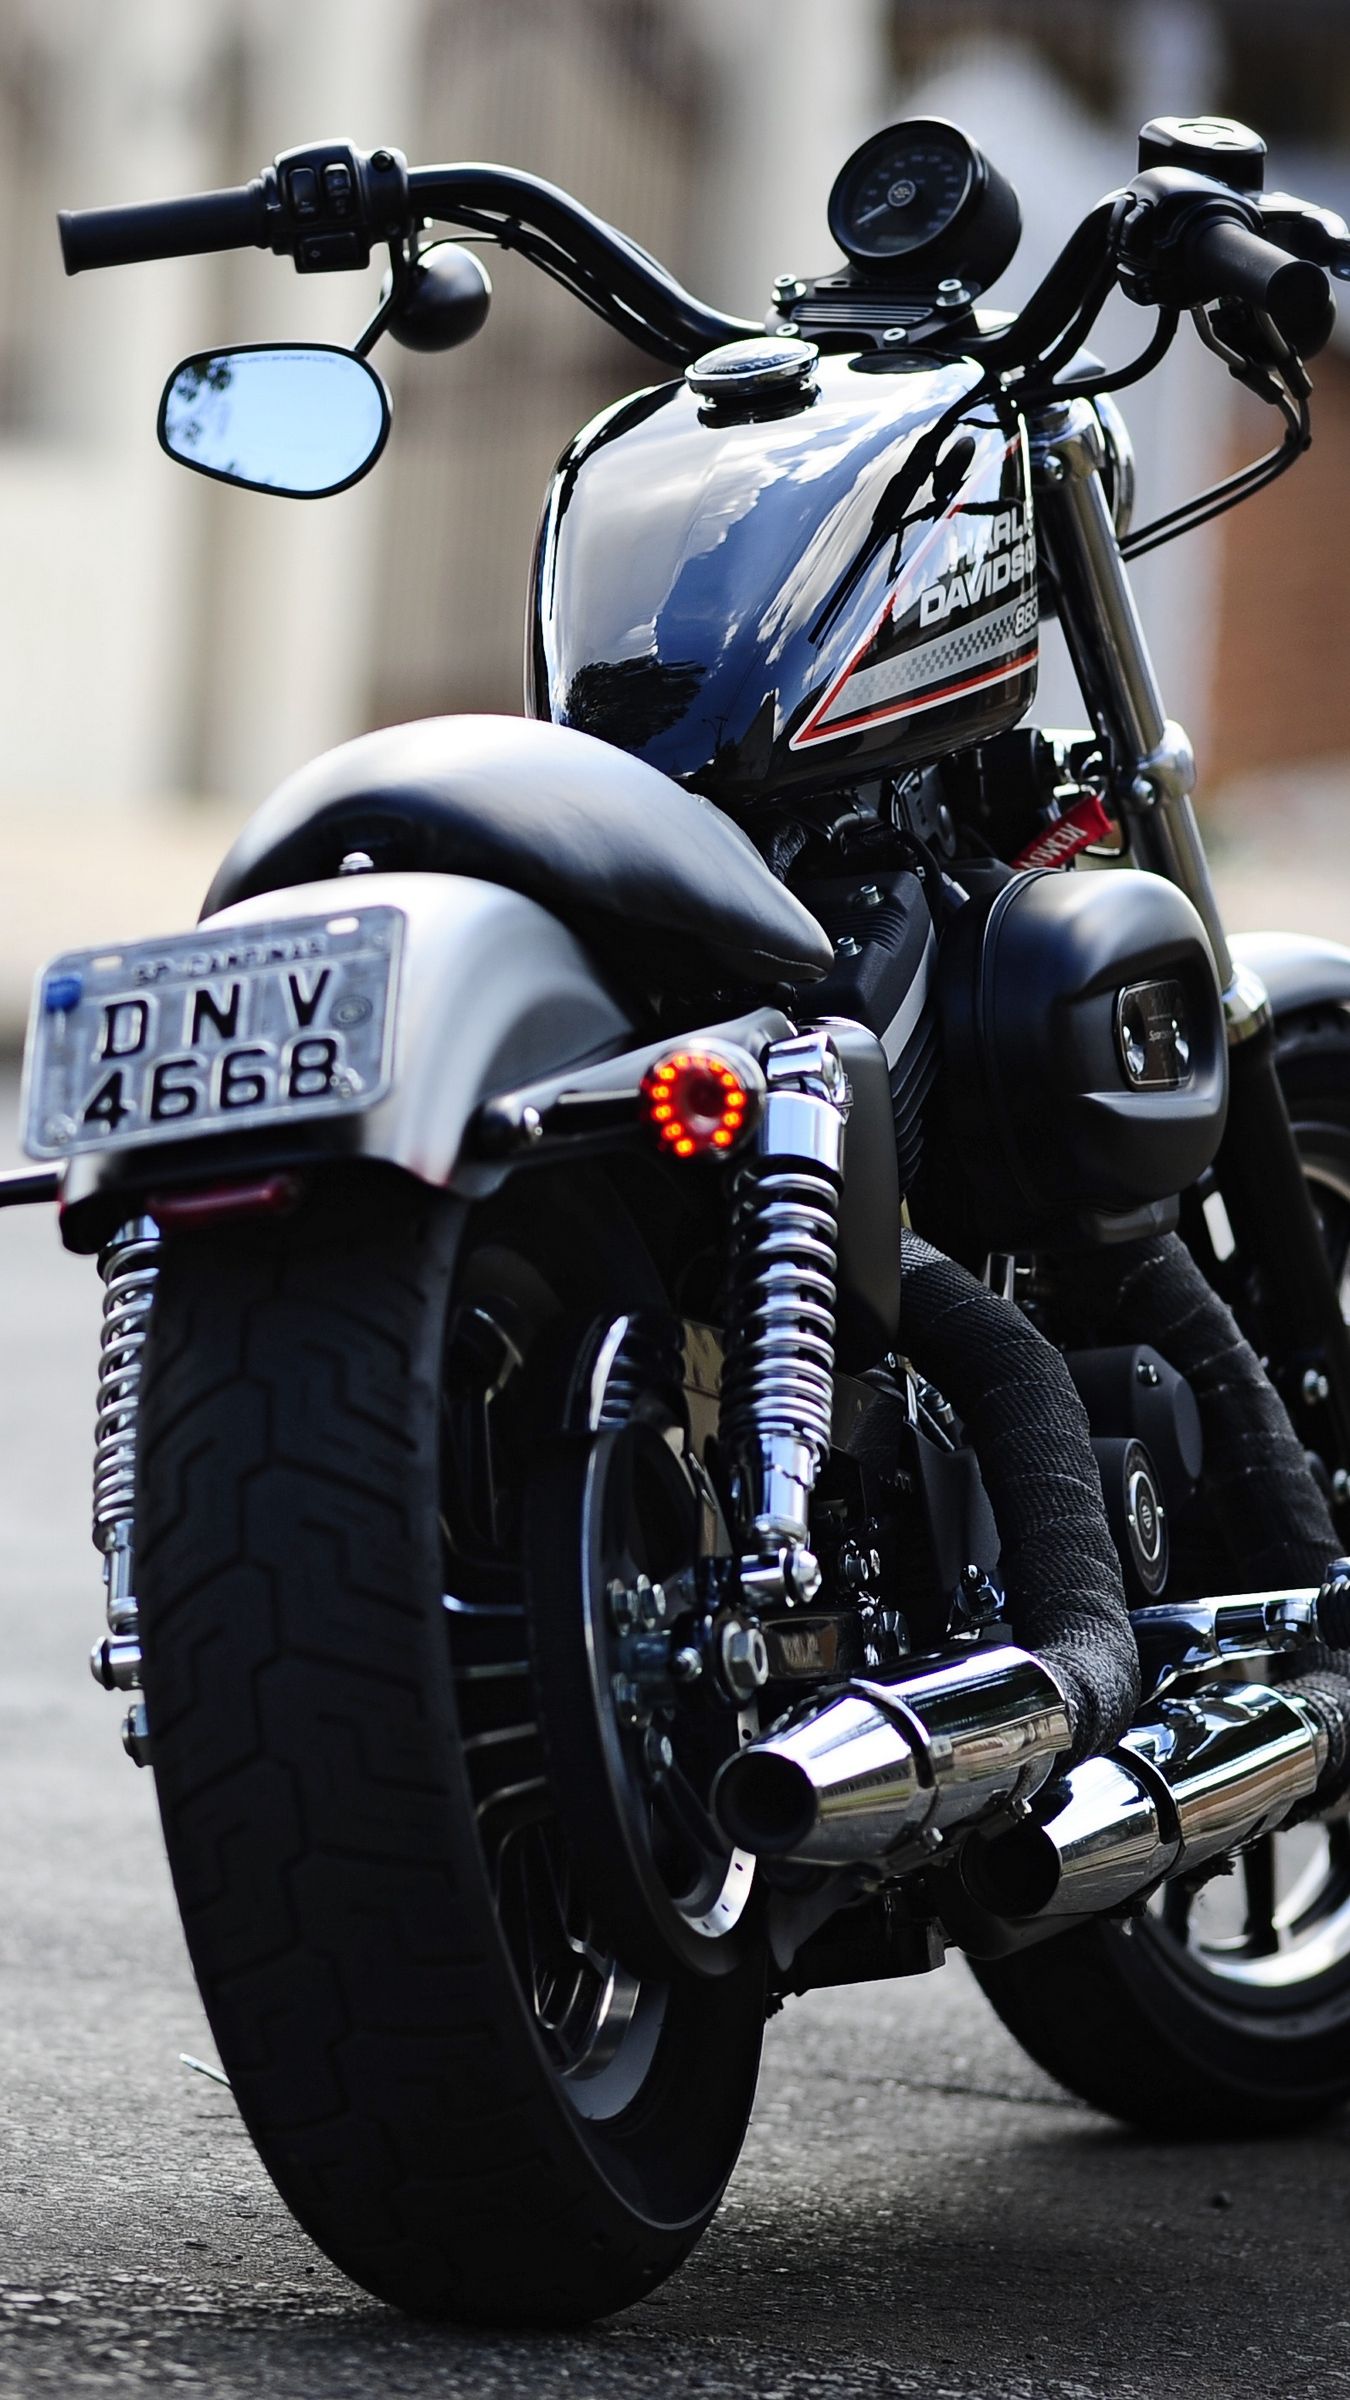 Moto Harley Davidson Wallpaper Pictures